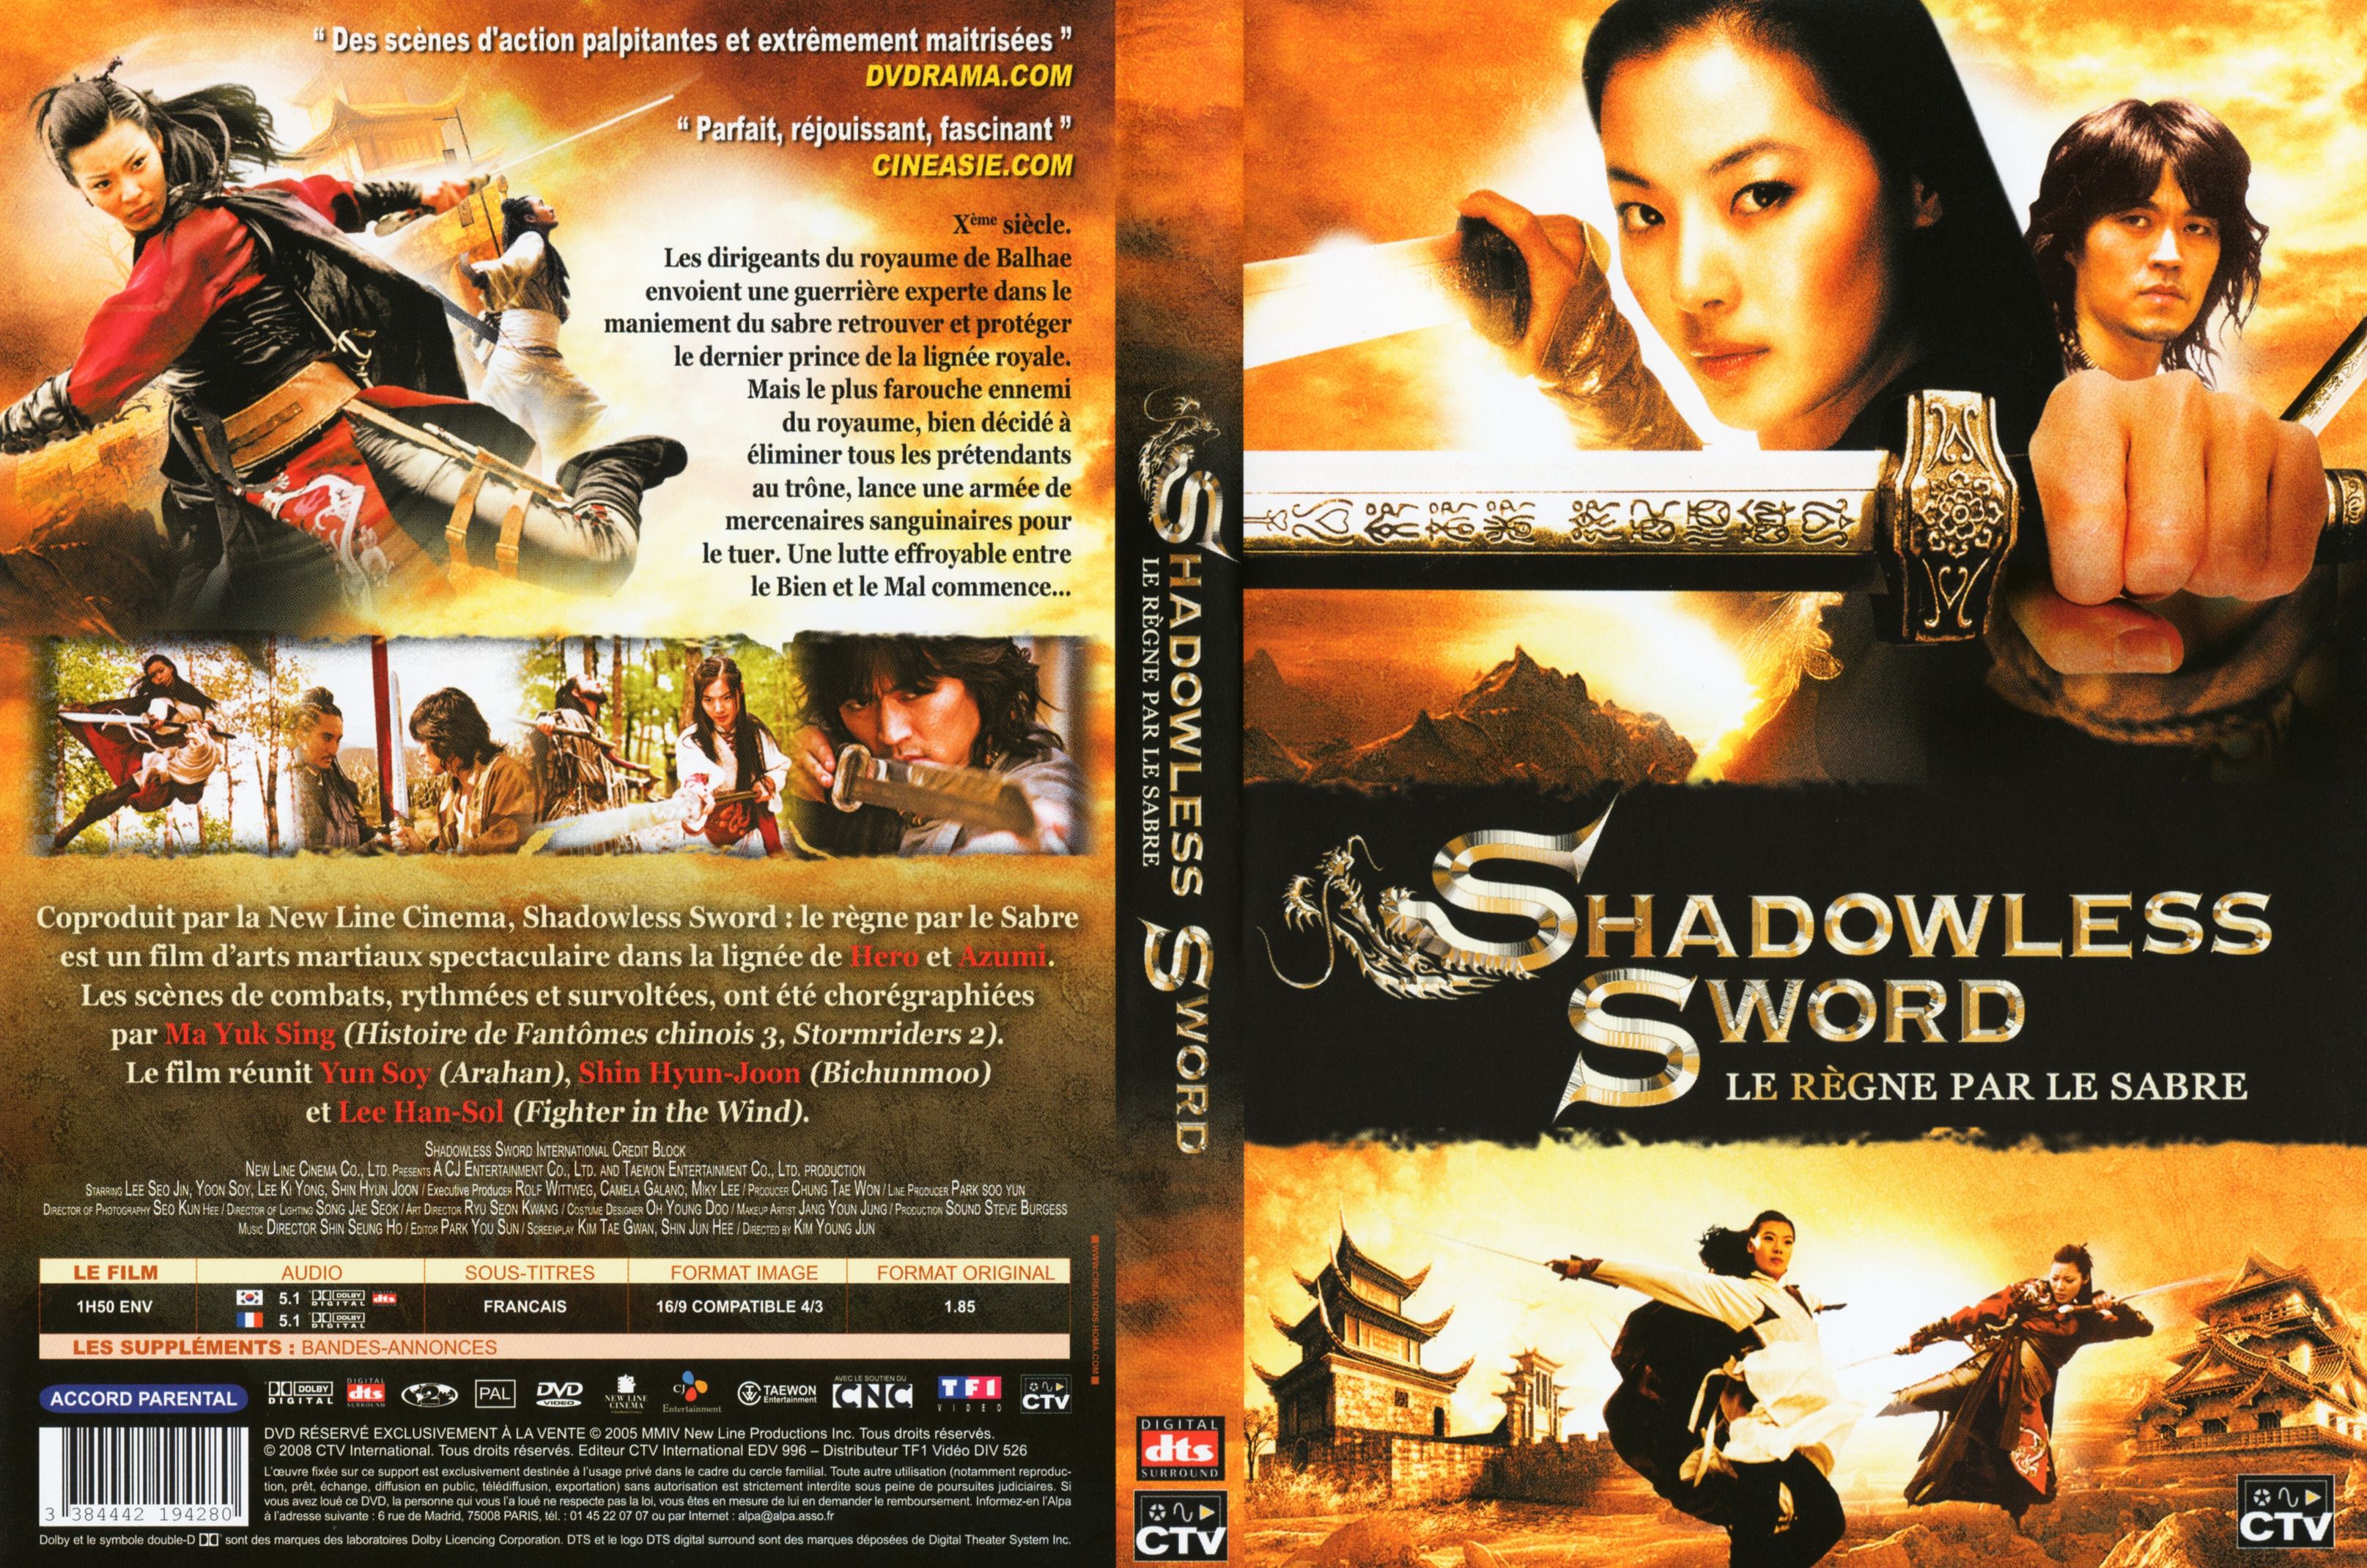 Jaquette DVD Shadowless Sword